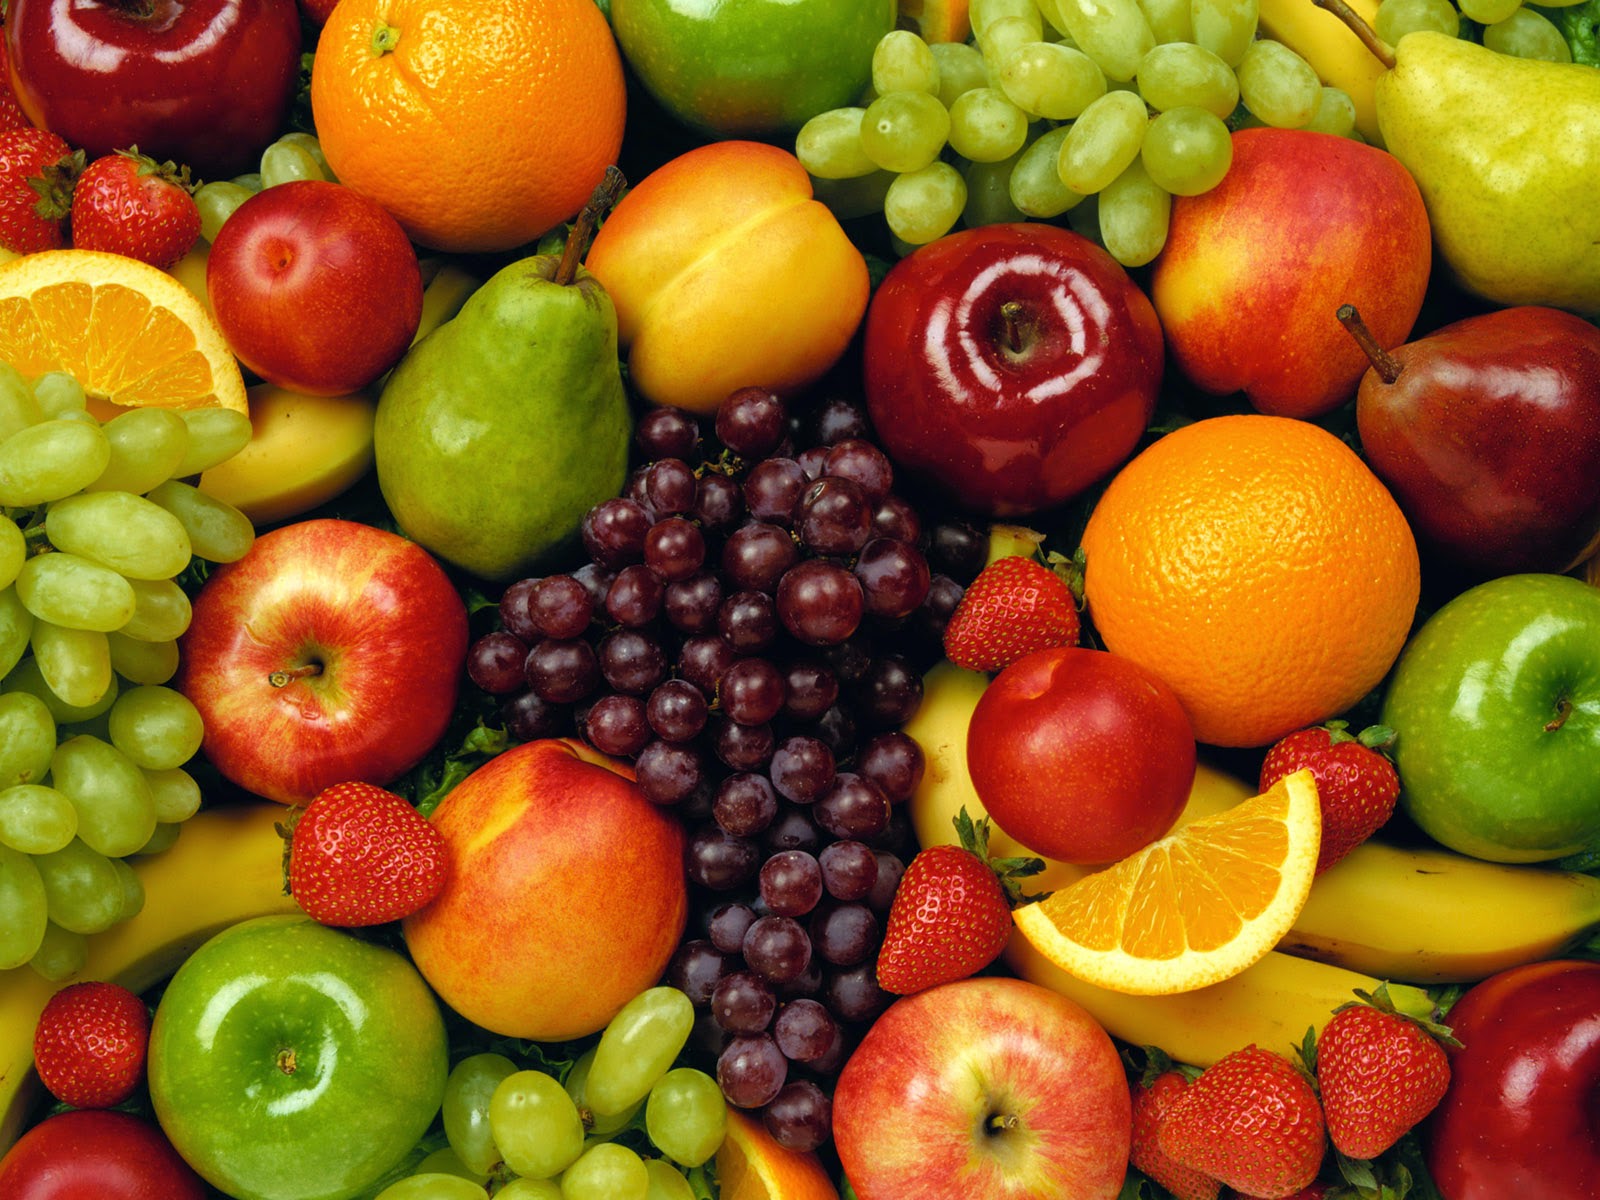 http://3.bp.blogspot.com/_l8xbbVIvBwQ/TGy6rjEq2VI/AAAAAAAAAPY/wF69e2Zot84/s1600/Importance+of+Fruits+In+Diet.jpg